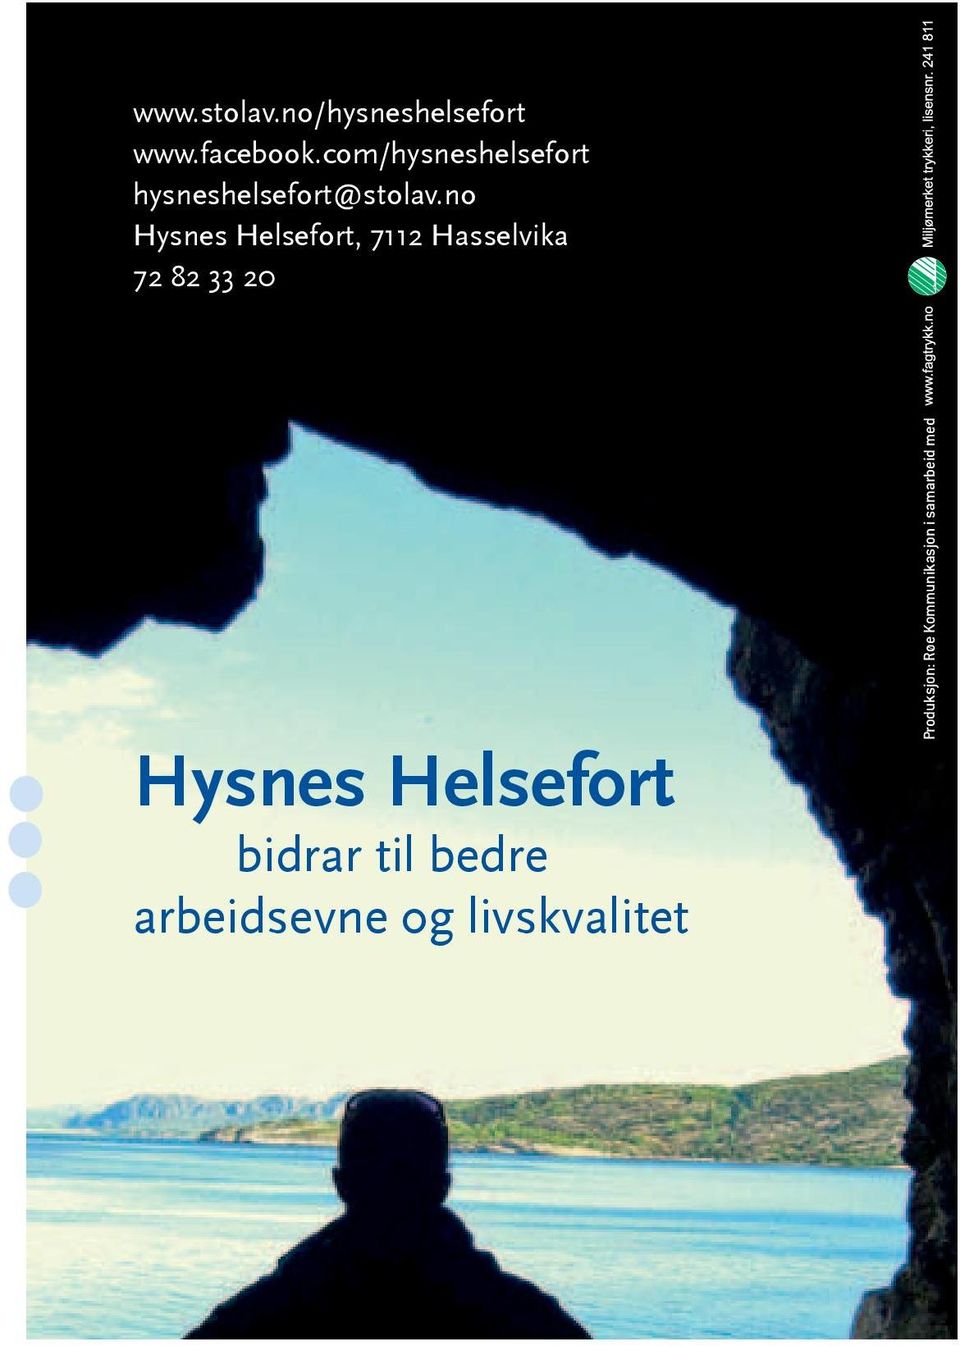 no Hysnes Helsefort, 7112 Hasselvika 72 82 33 20 Hysnes